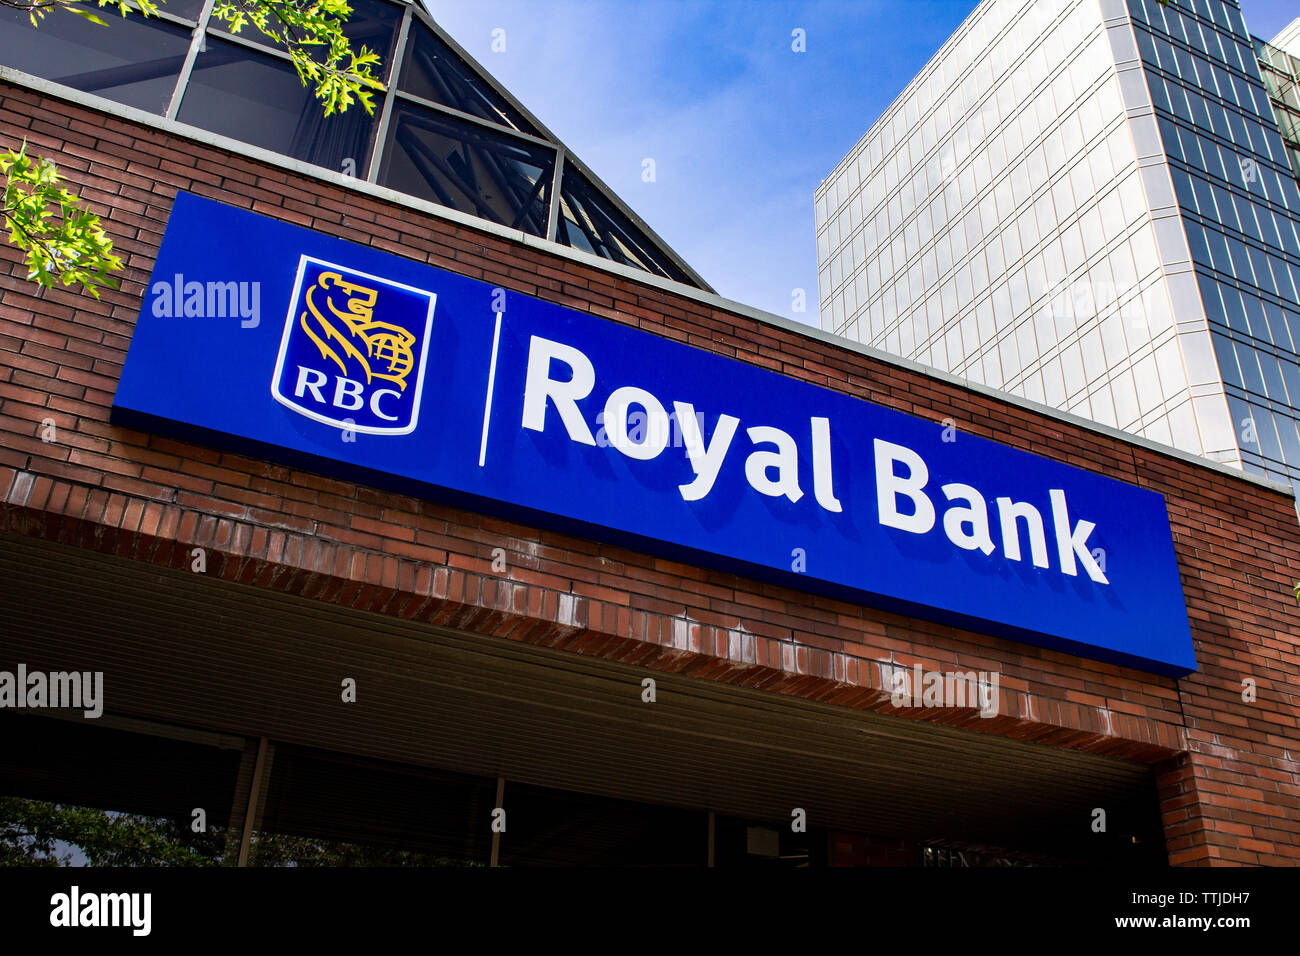 BURNABY, BRITISH COLUMBIA, CANADA - JUNE 1, 2019: RBC (Royal Bank of Canada) sign - Image Stock Photo